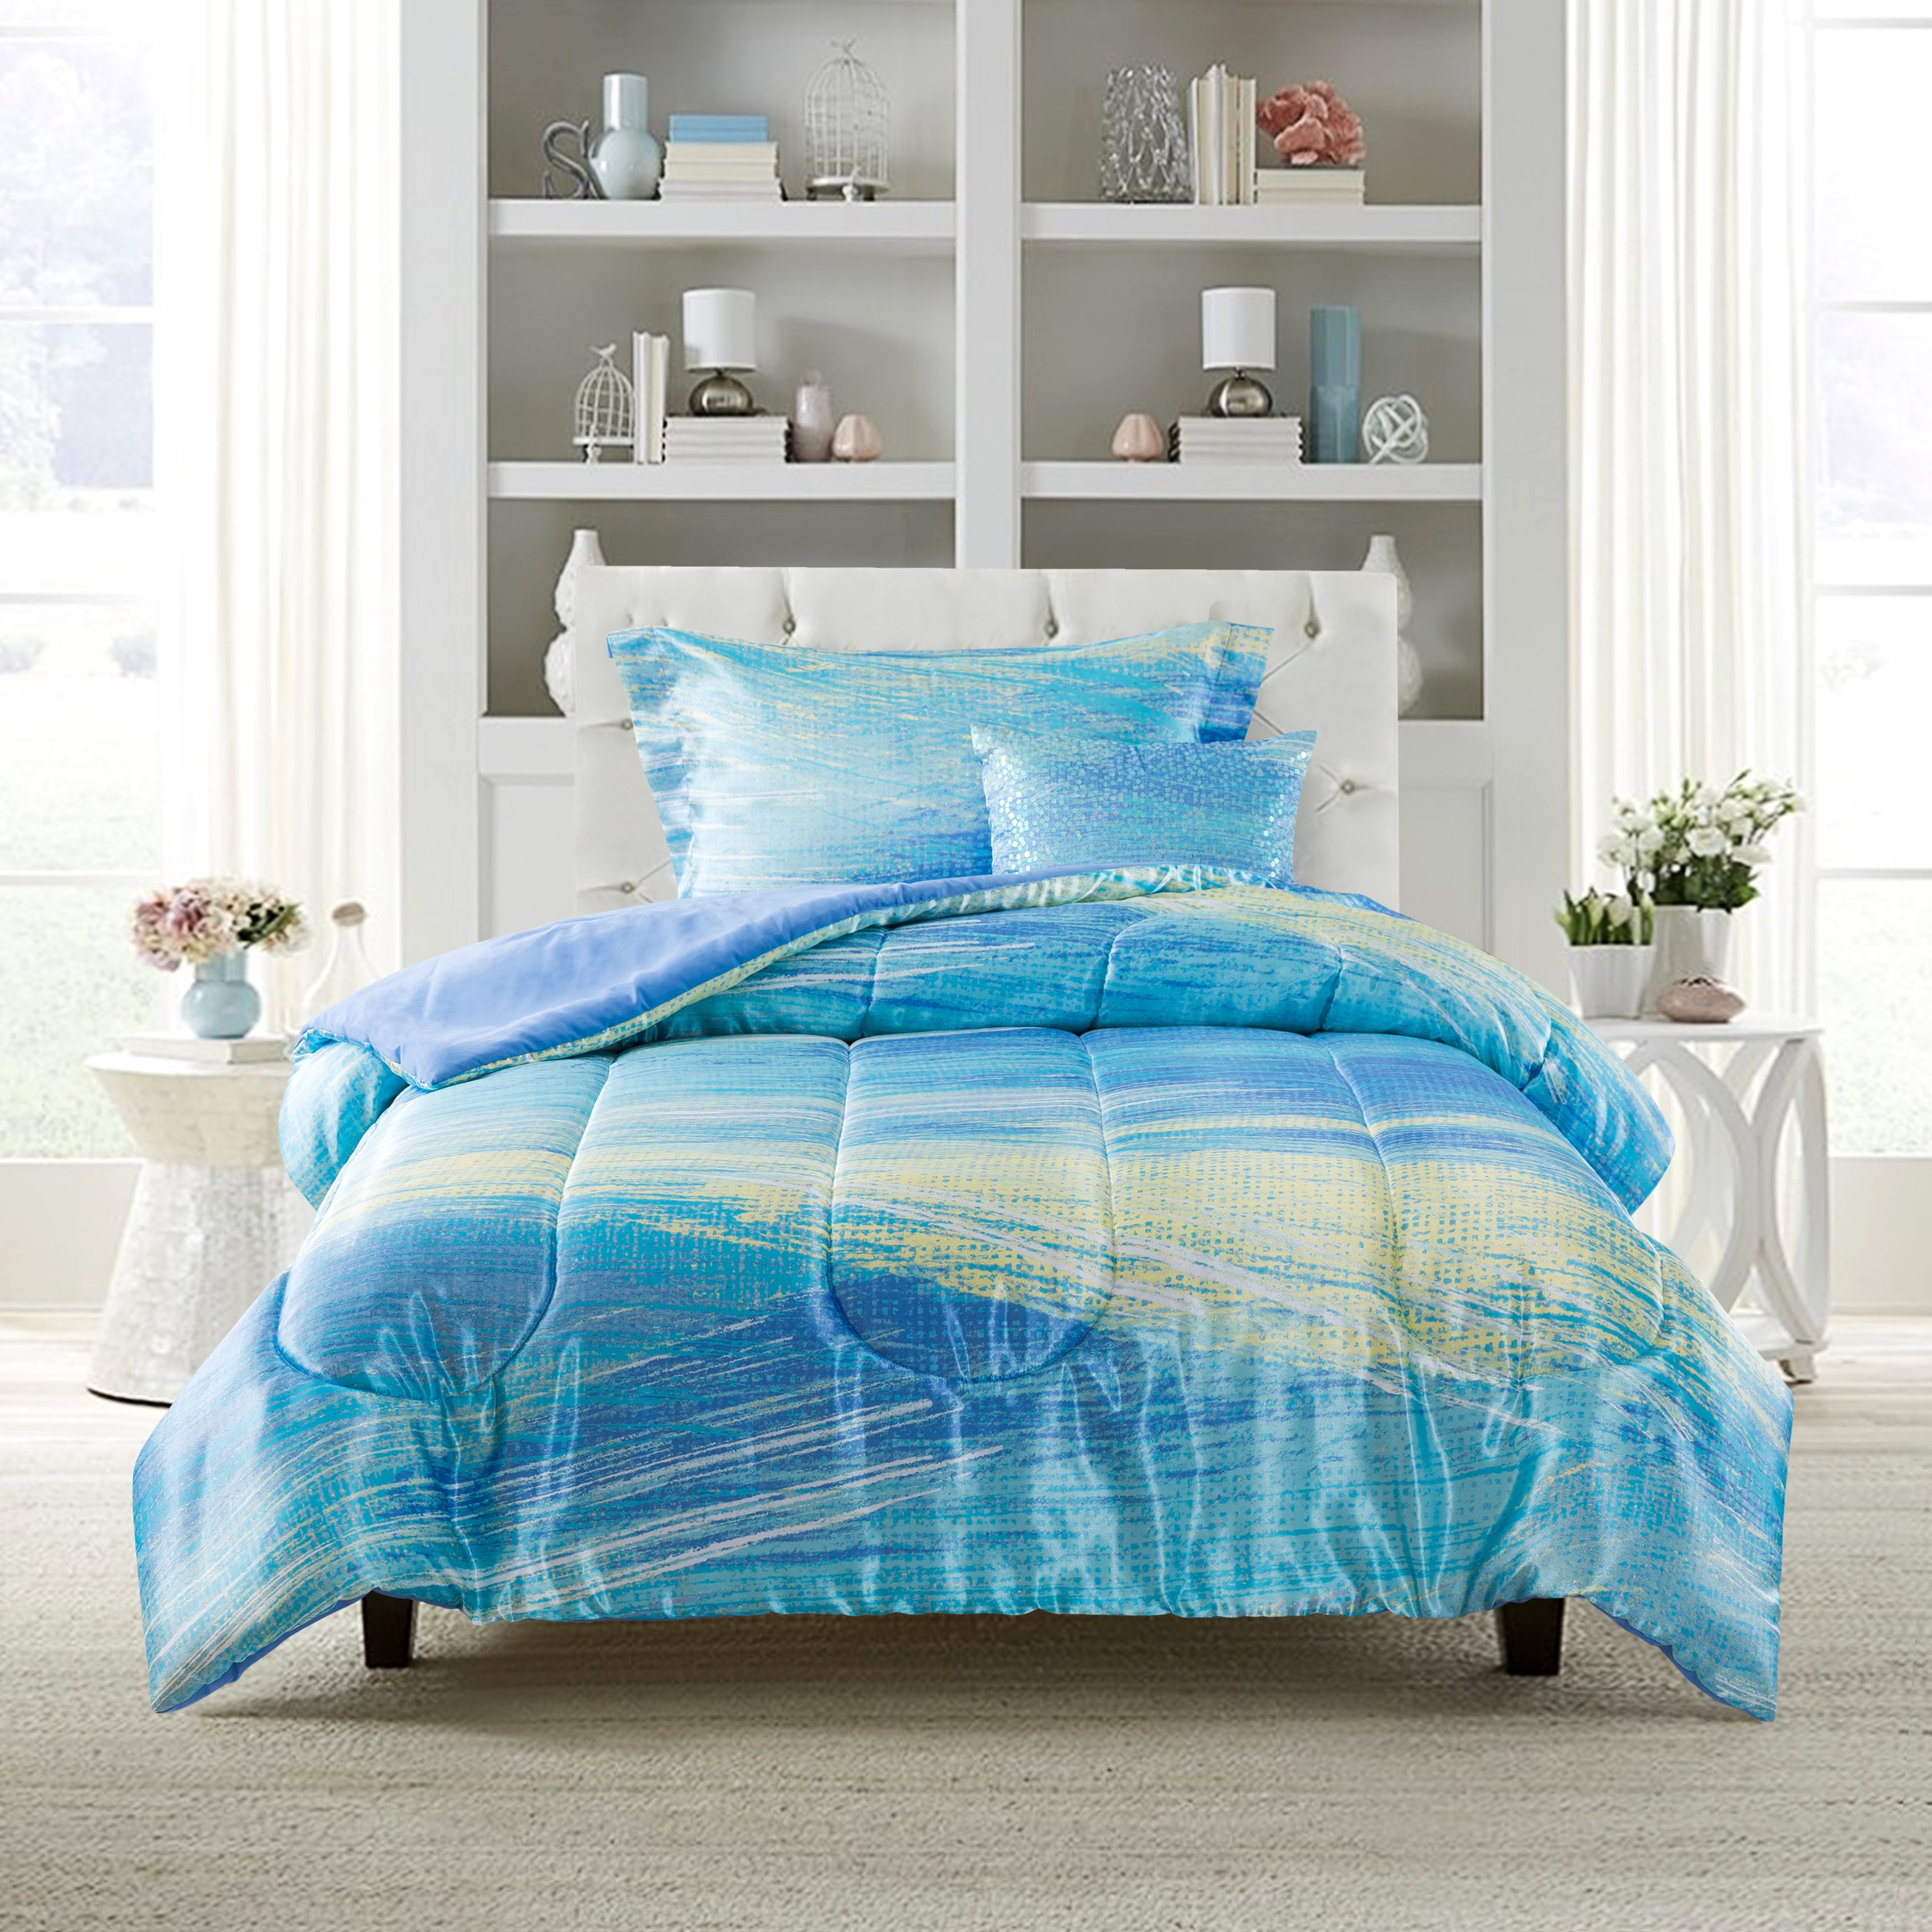 Mainstays Sparkling Strokes 3-Piece Comforter Set with Bonus Decorative Pillow, 